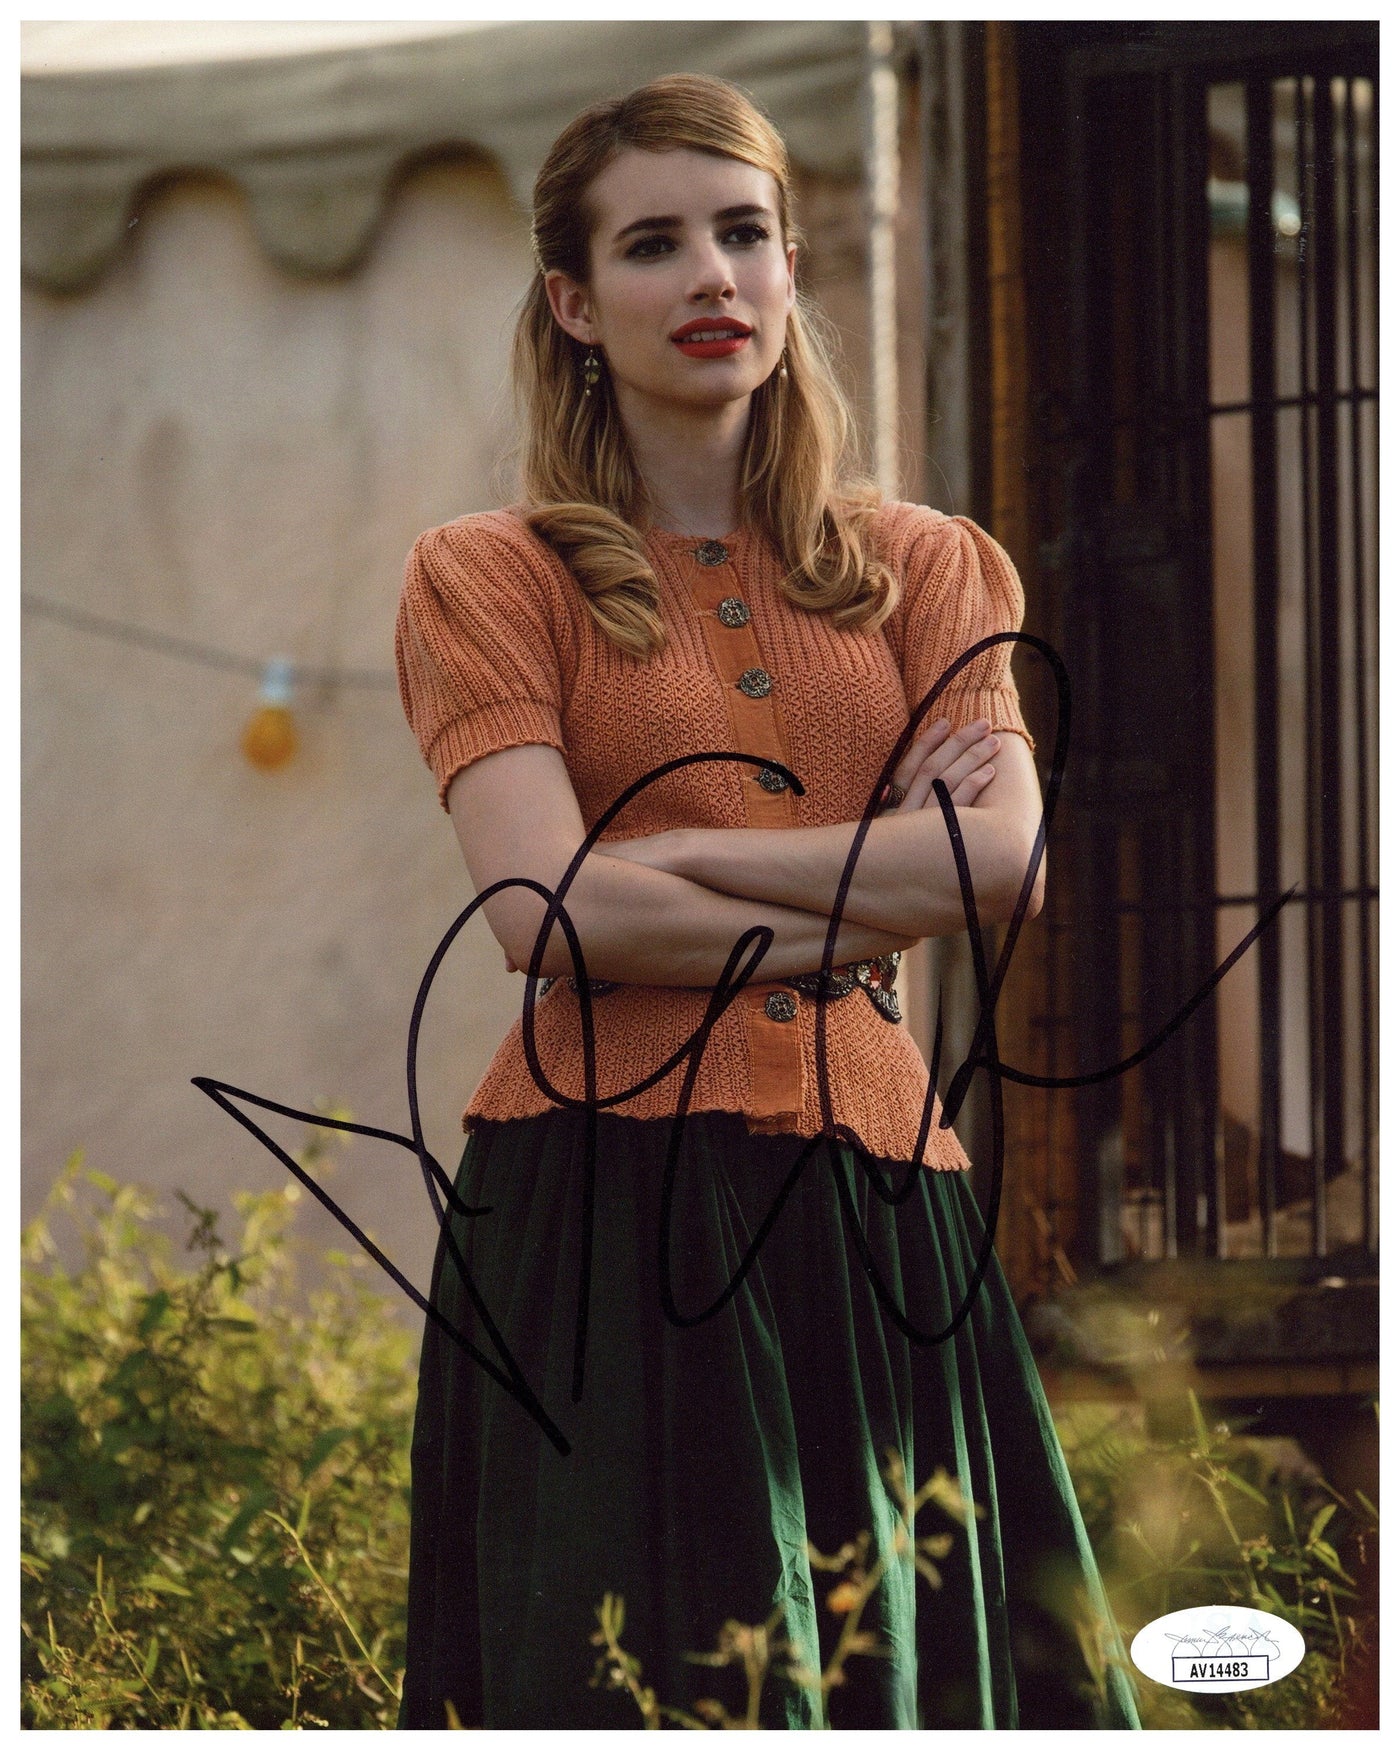 Emma Roberts Signed 8x10 Photo American Horror Story Autographed JSA COA #3